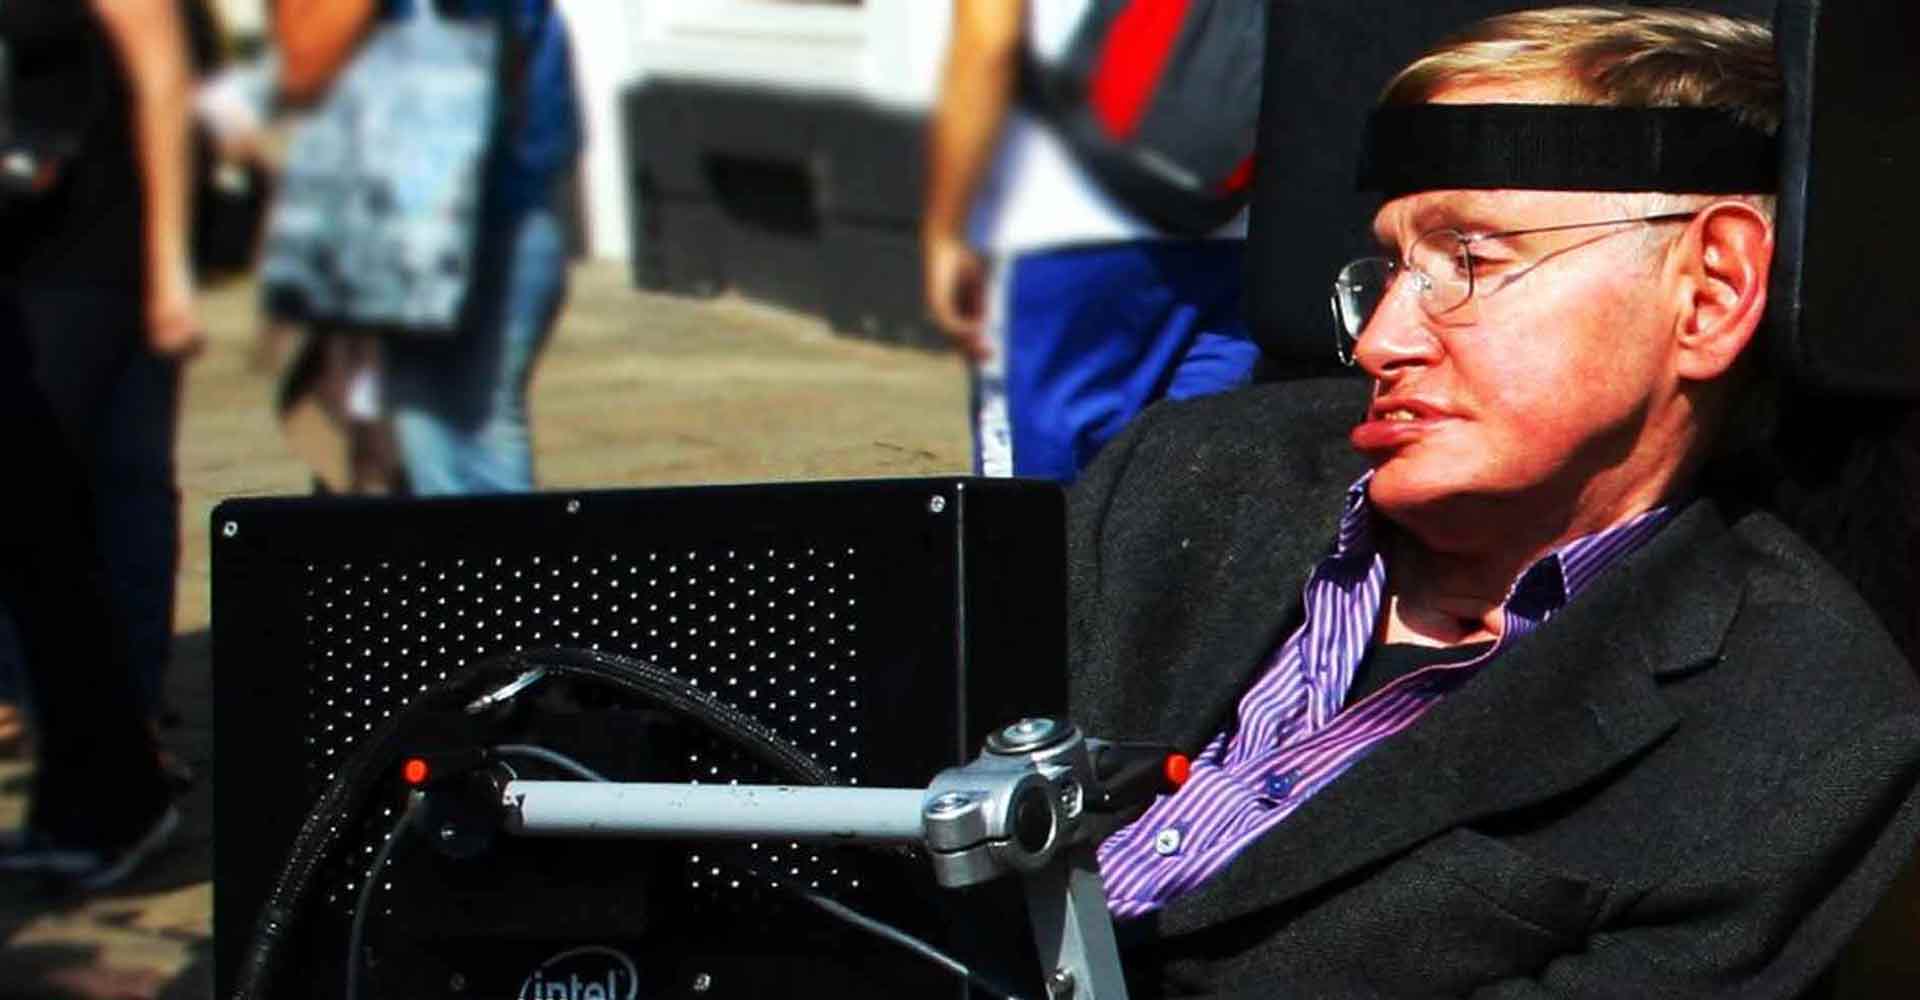 Stephen Hawking in Cambridge, the gravity god